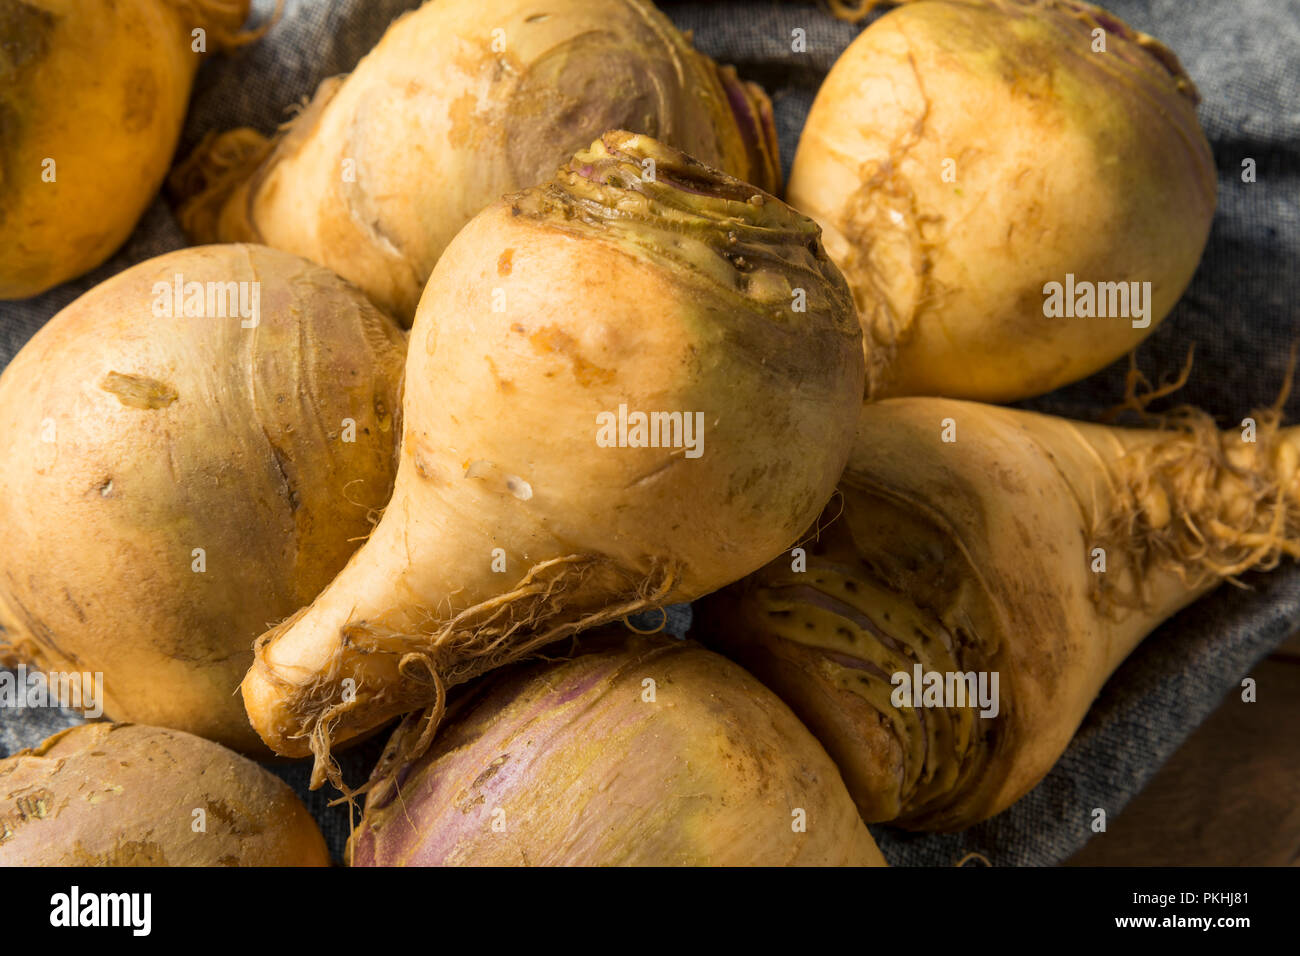 Healthy Raw Organic Brown Rutabaga Root Vegetables Stock Photo